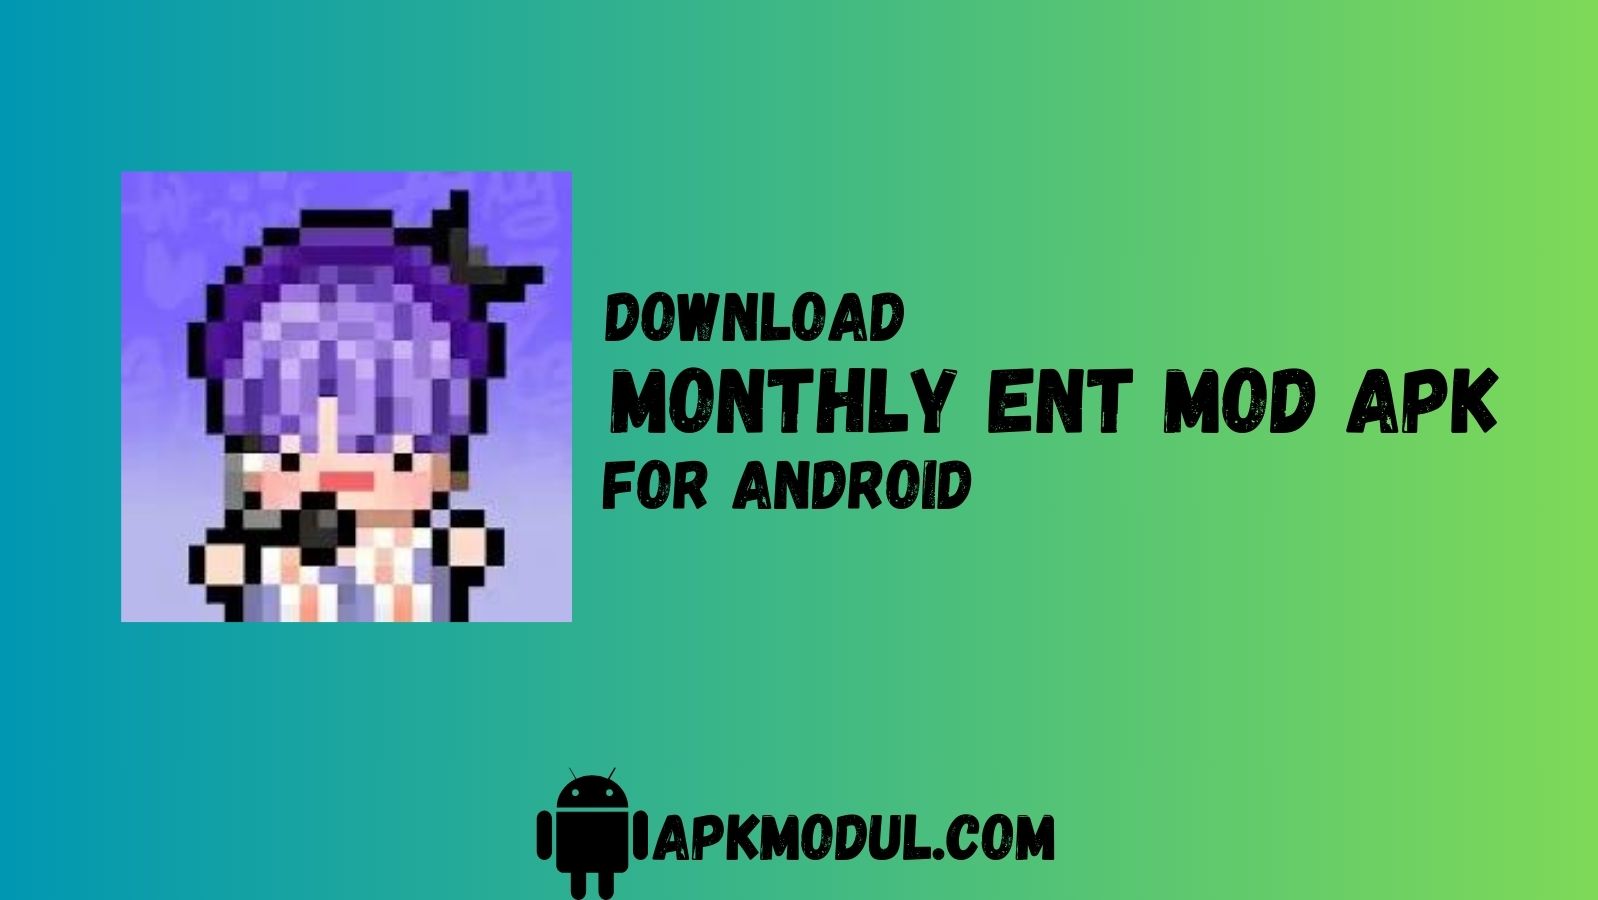 Monthly Entertainment mod app